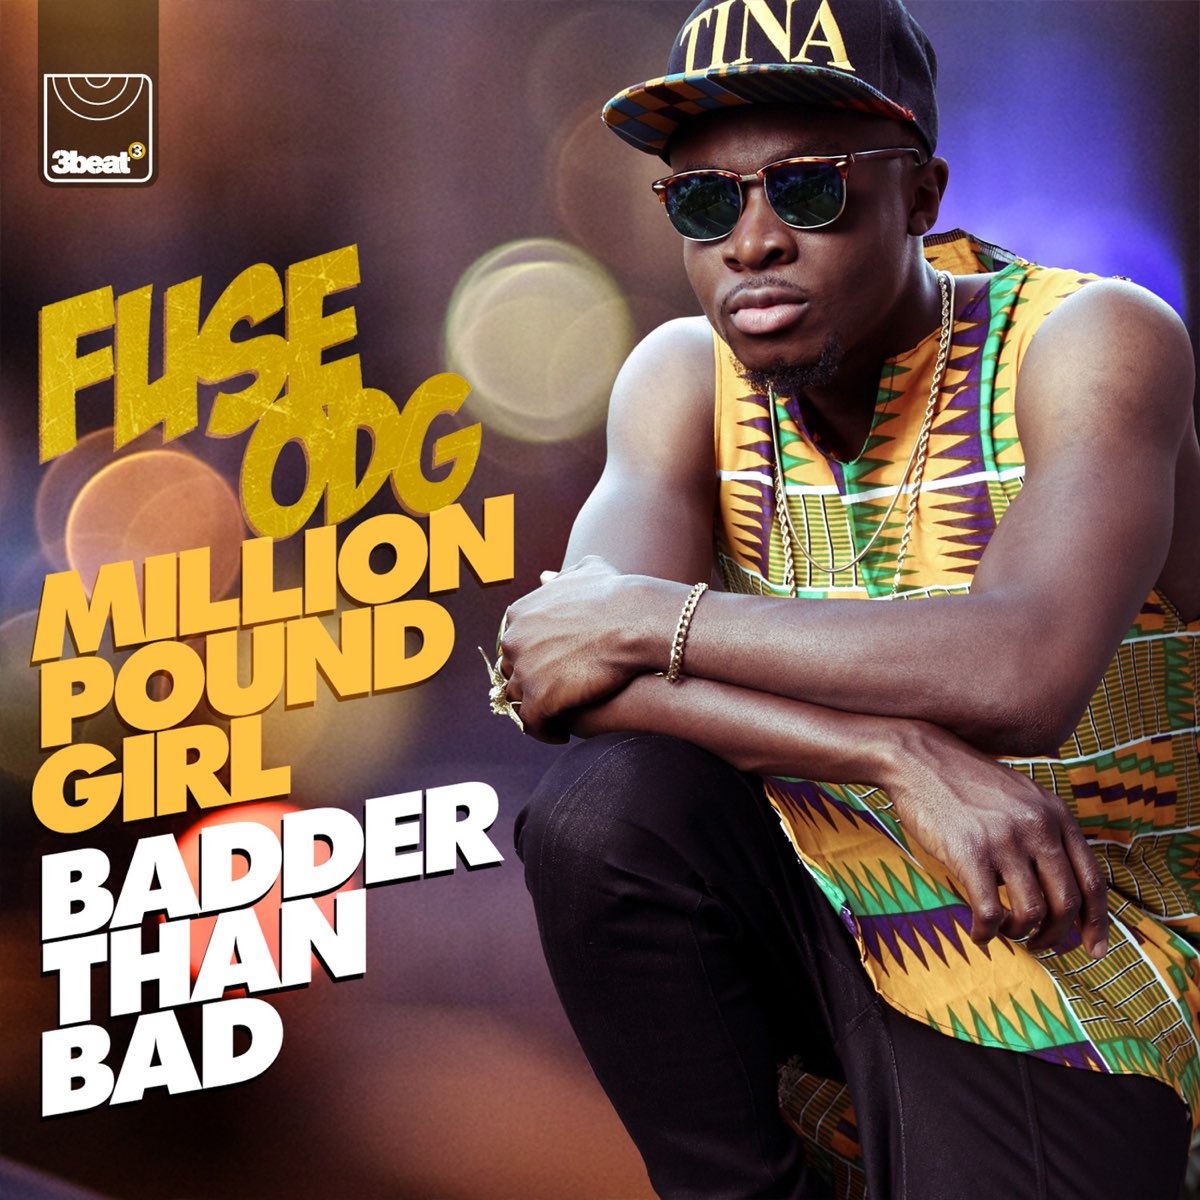 ‎Million Pound Girl (Badder Than Bad) - EP by Fuse ODG on Apple Music